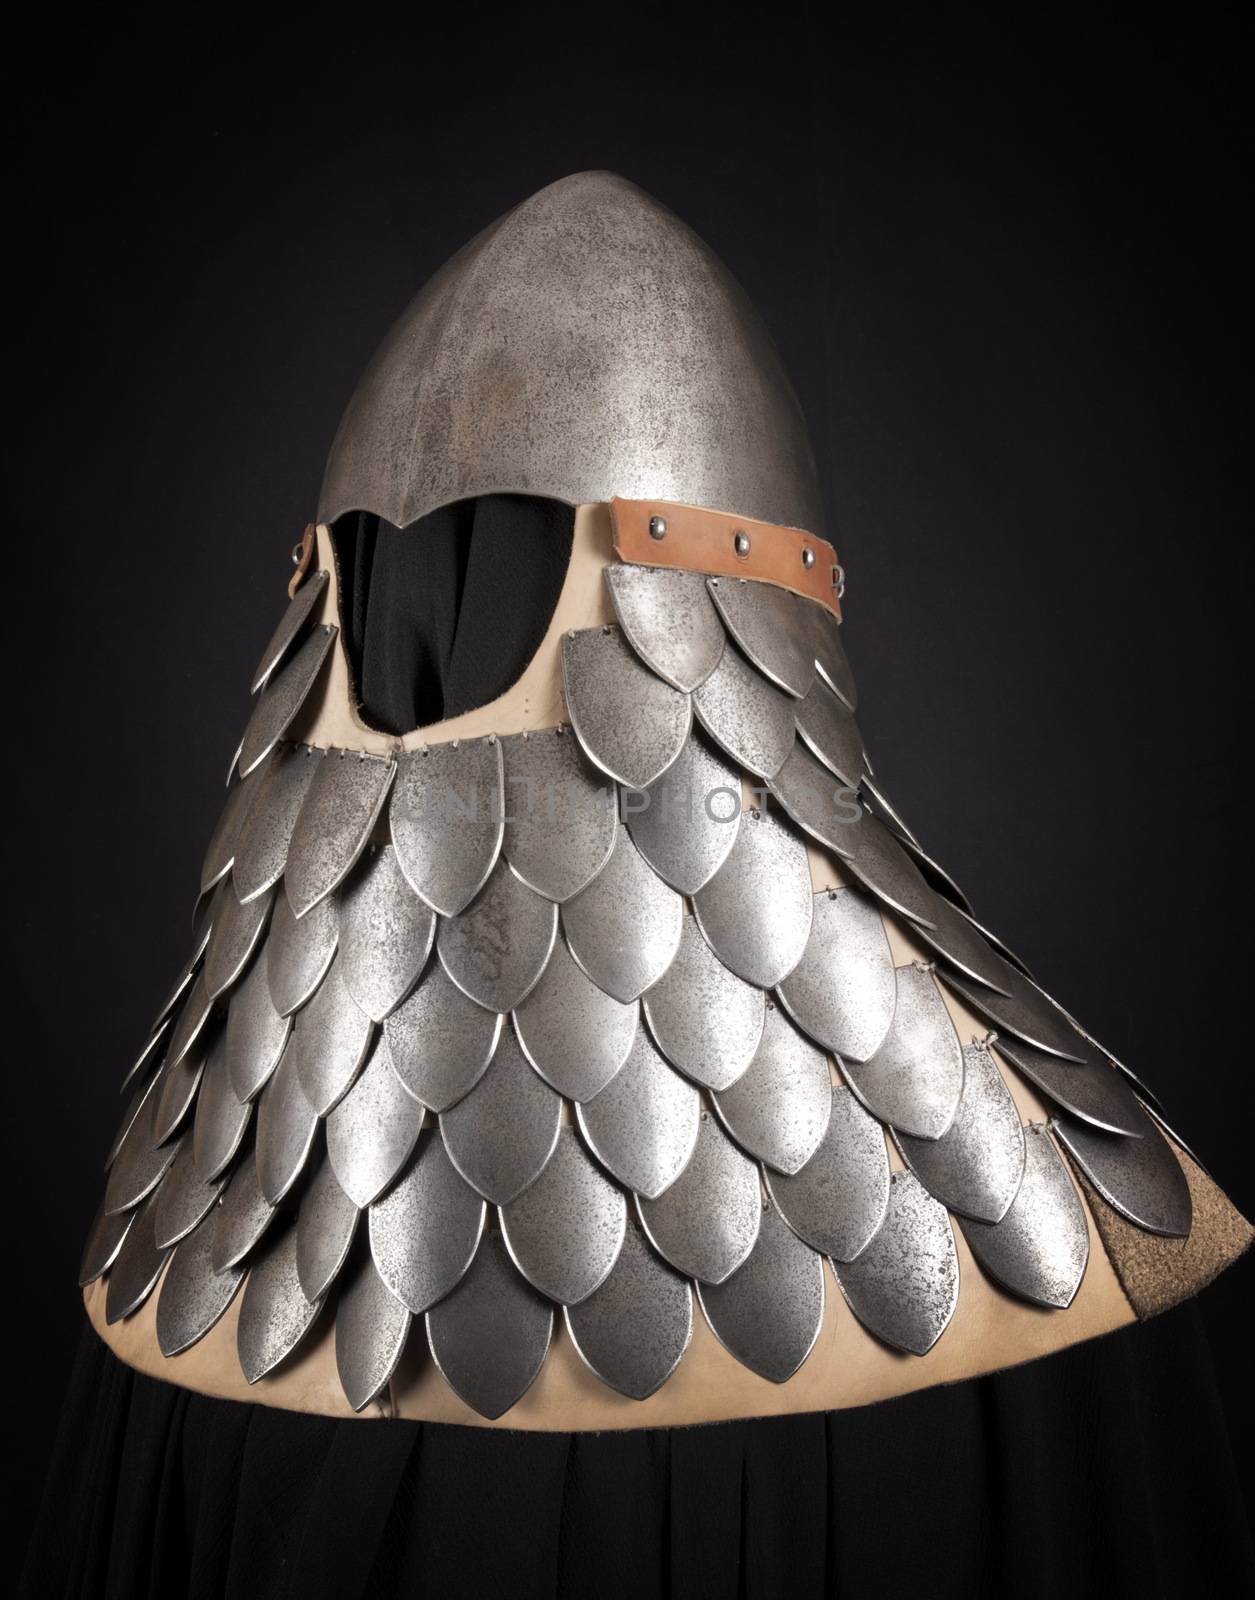 Iron helmet by sibrikov